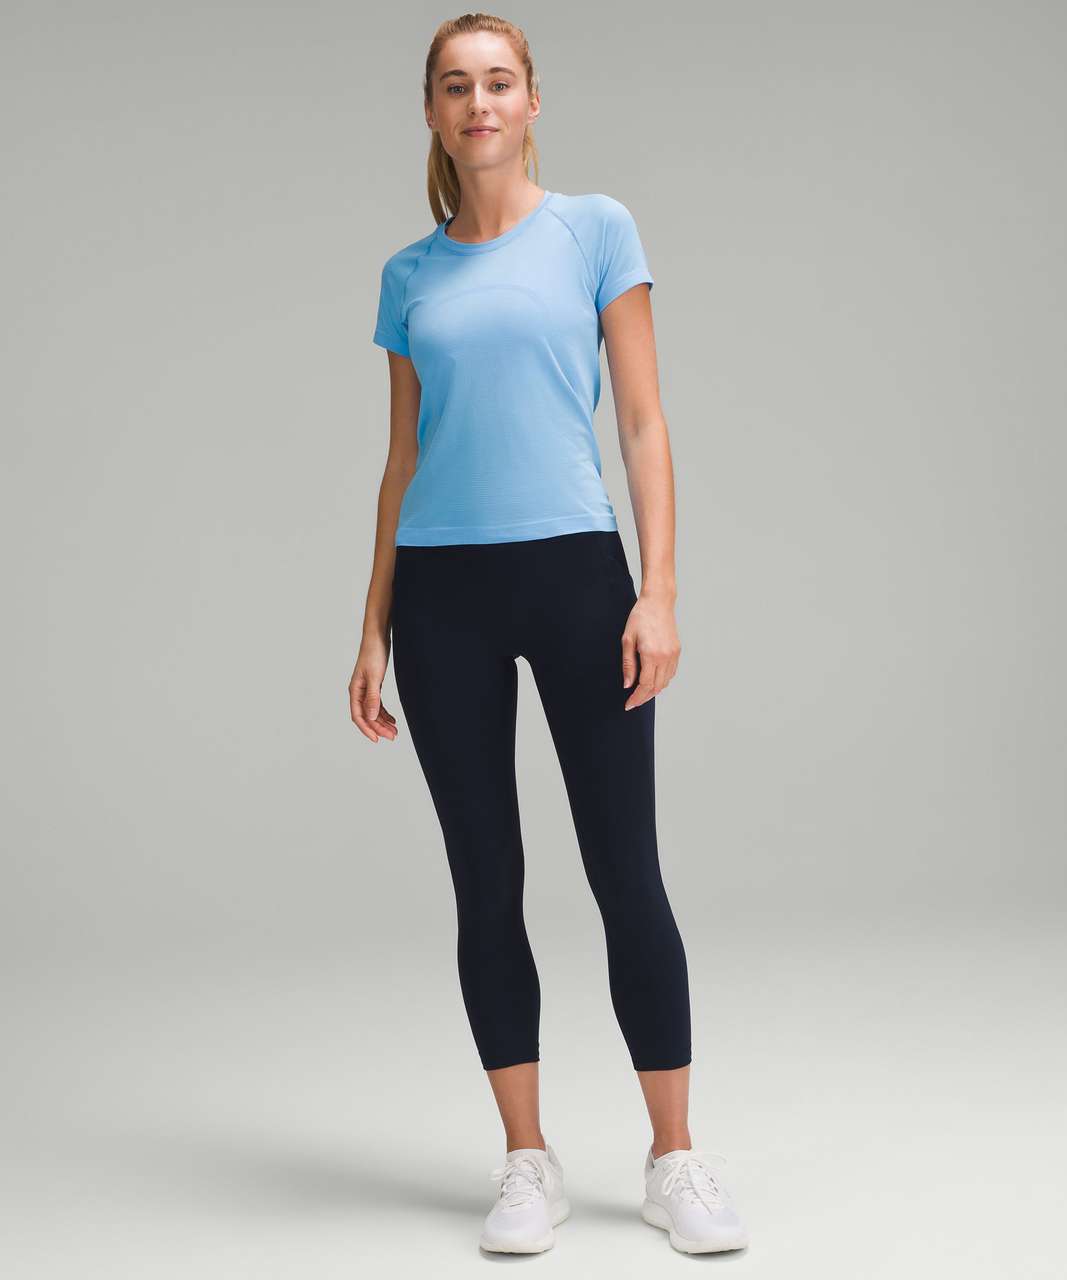 Lululemon Swiftly Tech Short-Sleeve Shirt 2.0 *Race Length - Aero Blue / Aero Blue